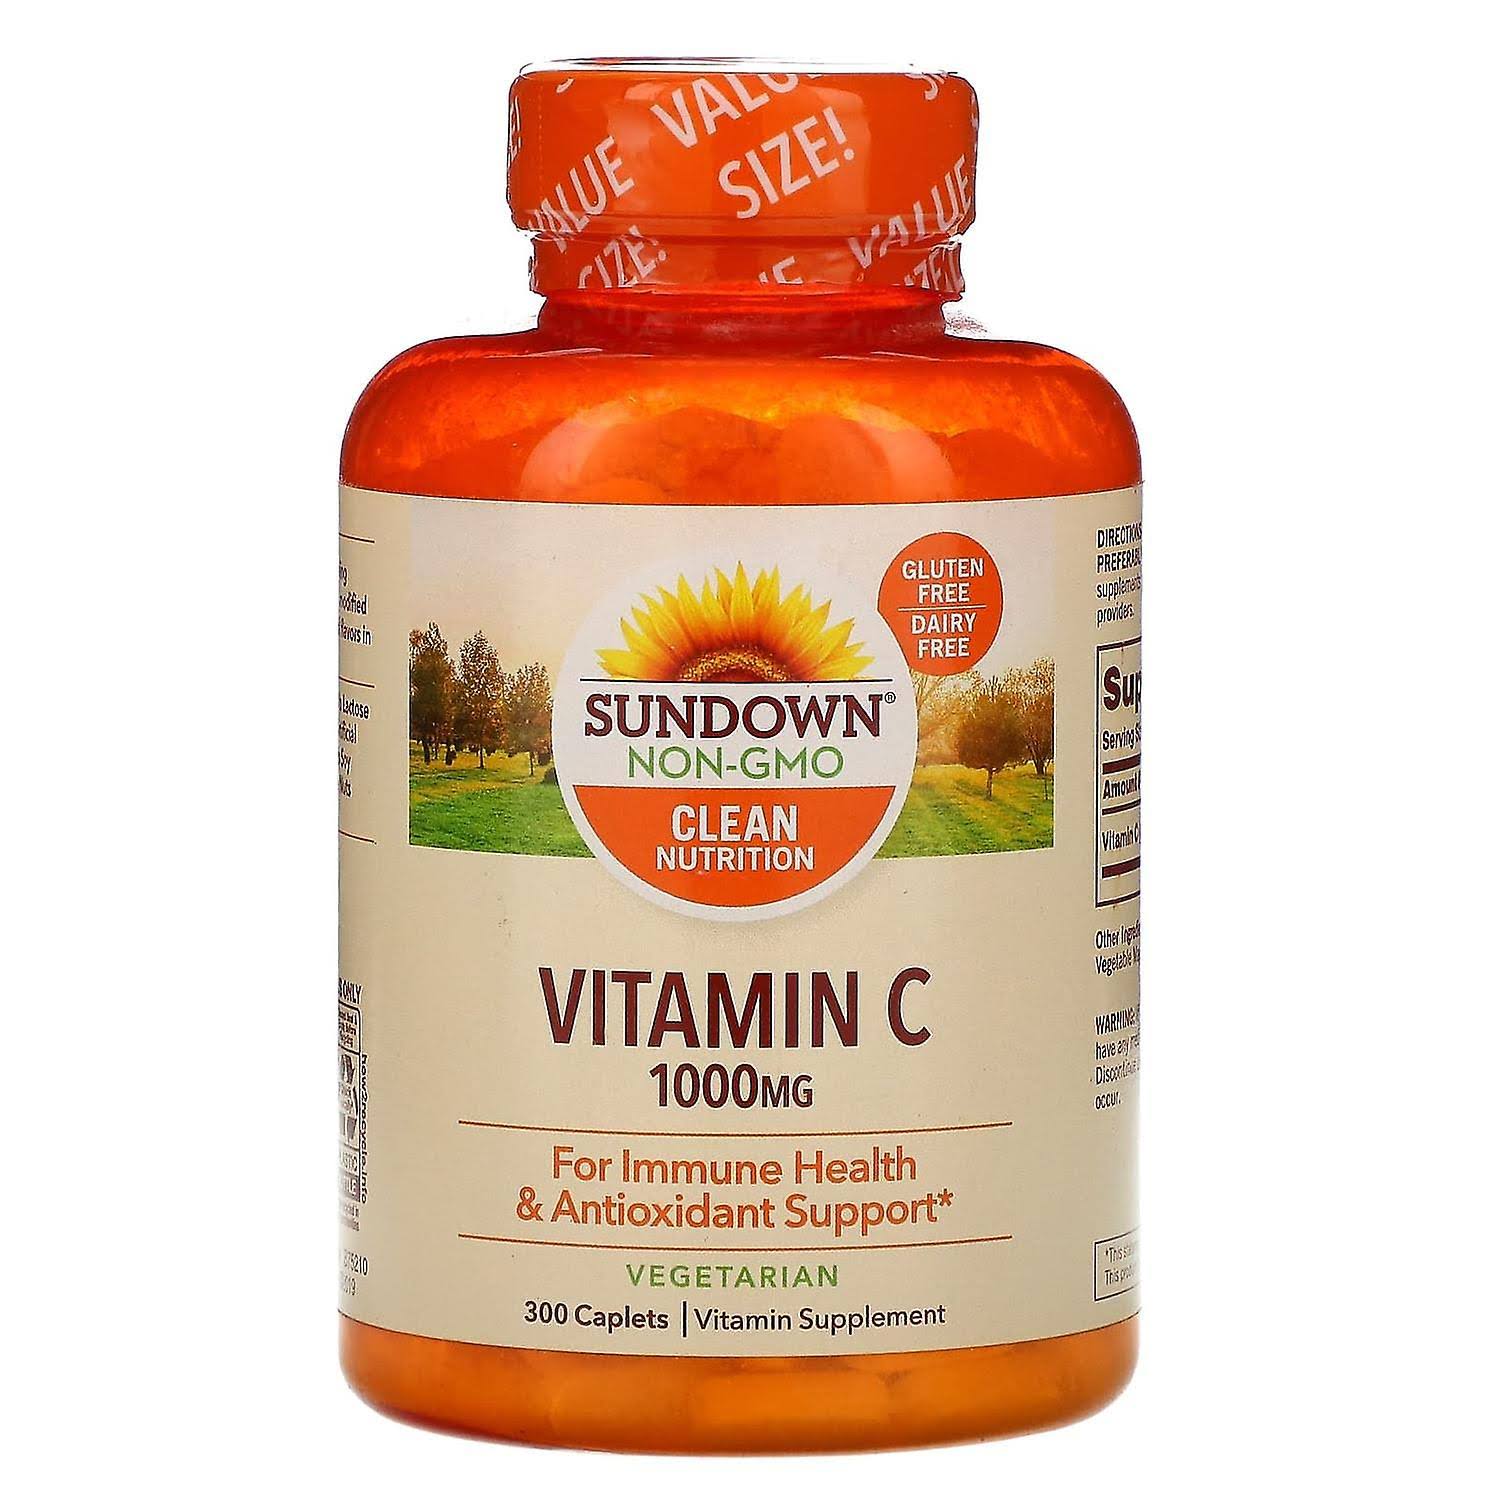 Sundown Naturals Vitamin C Caplets Supplement - 1000mg, 300ct